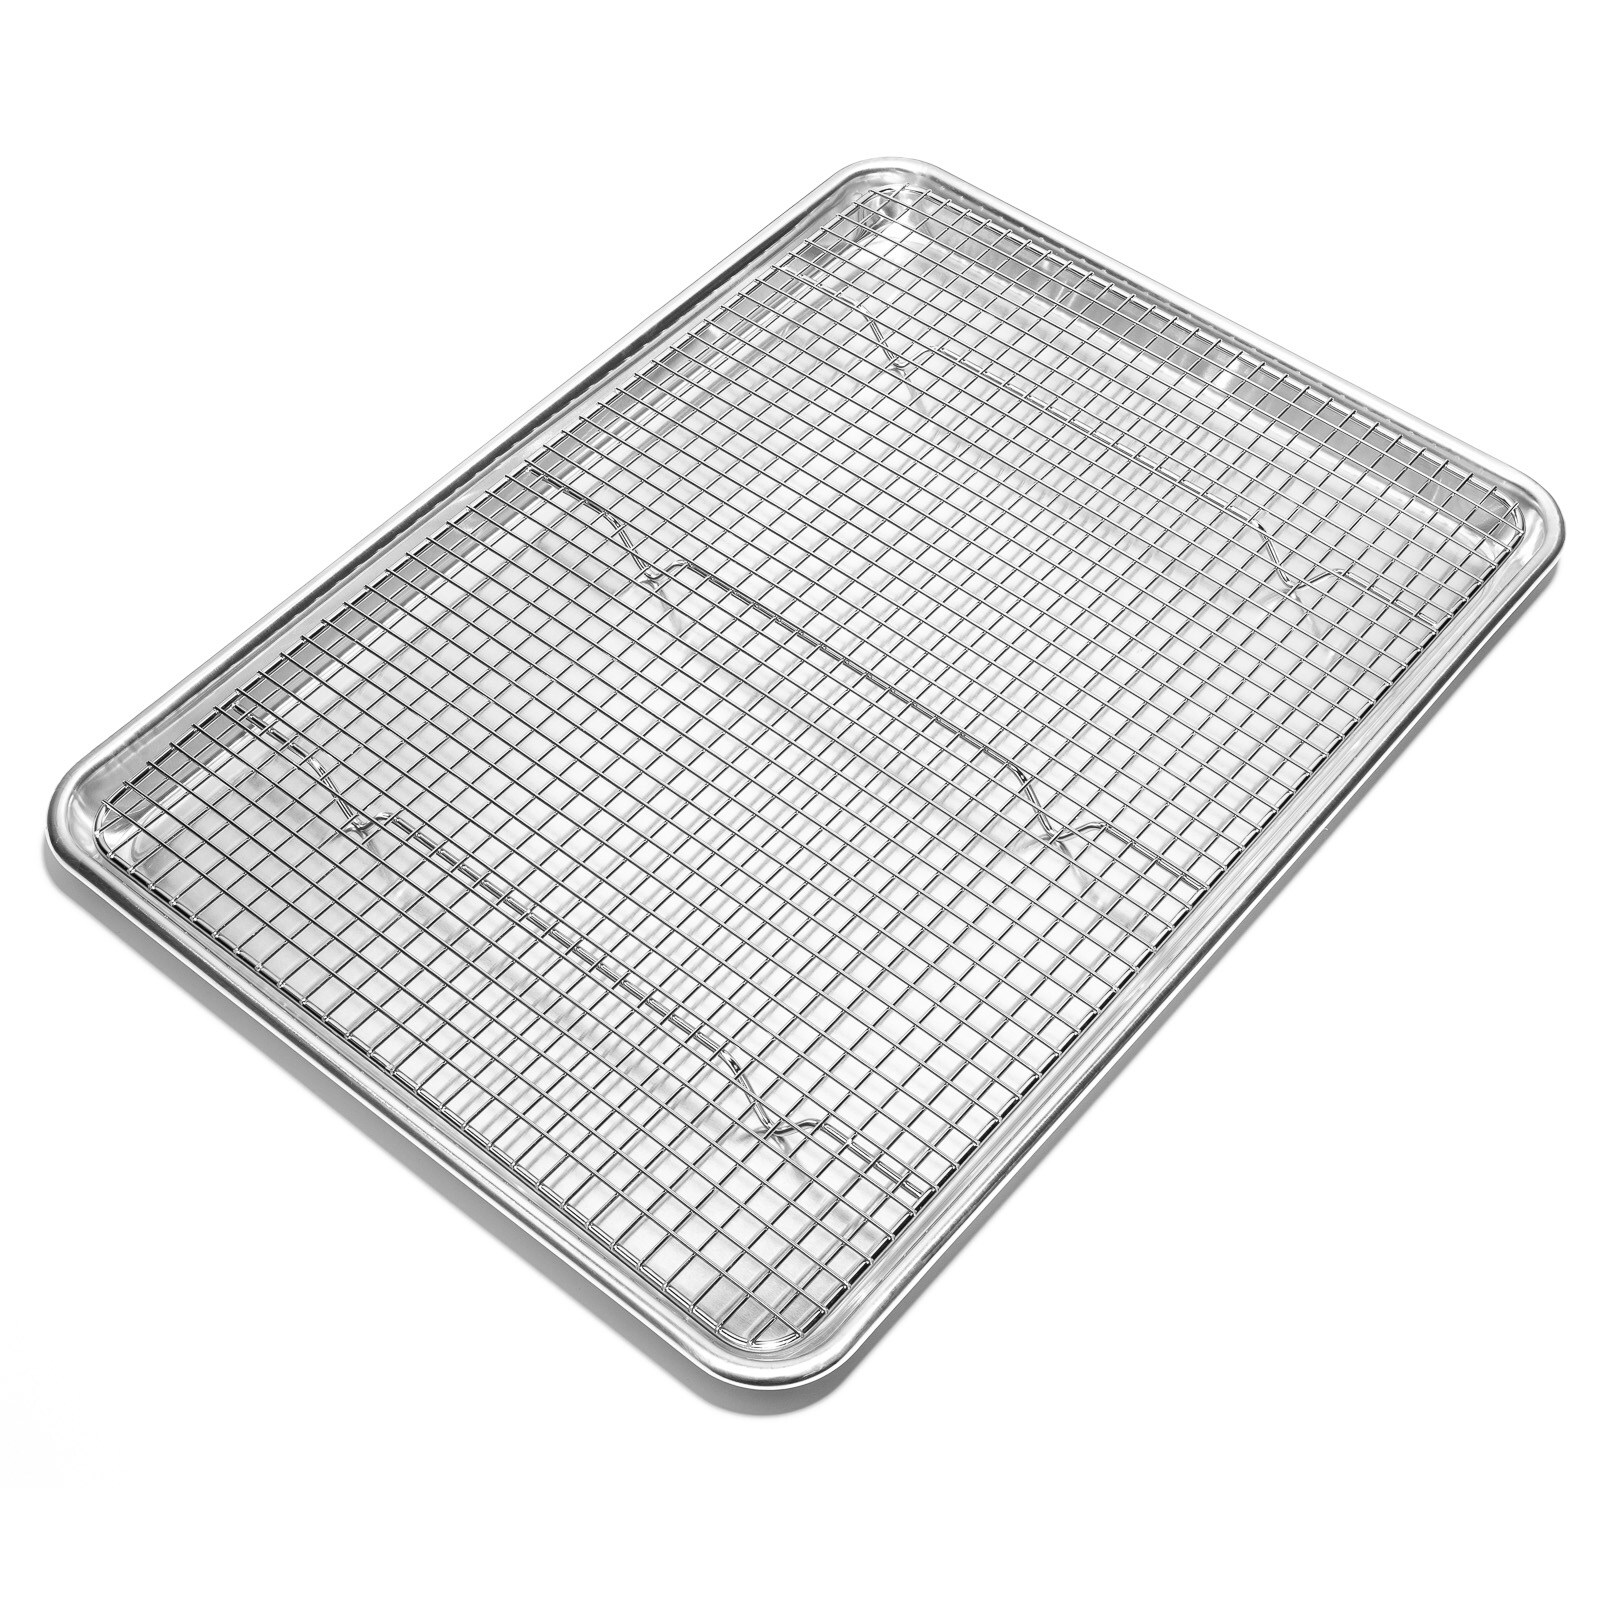 Set of 2) Stainless Steel Baking & Cooling Racks - Bed Bath & Beyond -  31662831